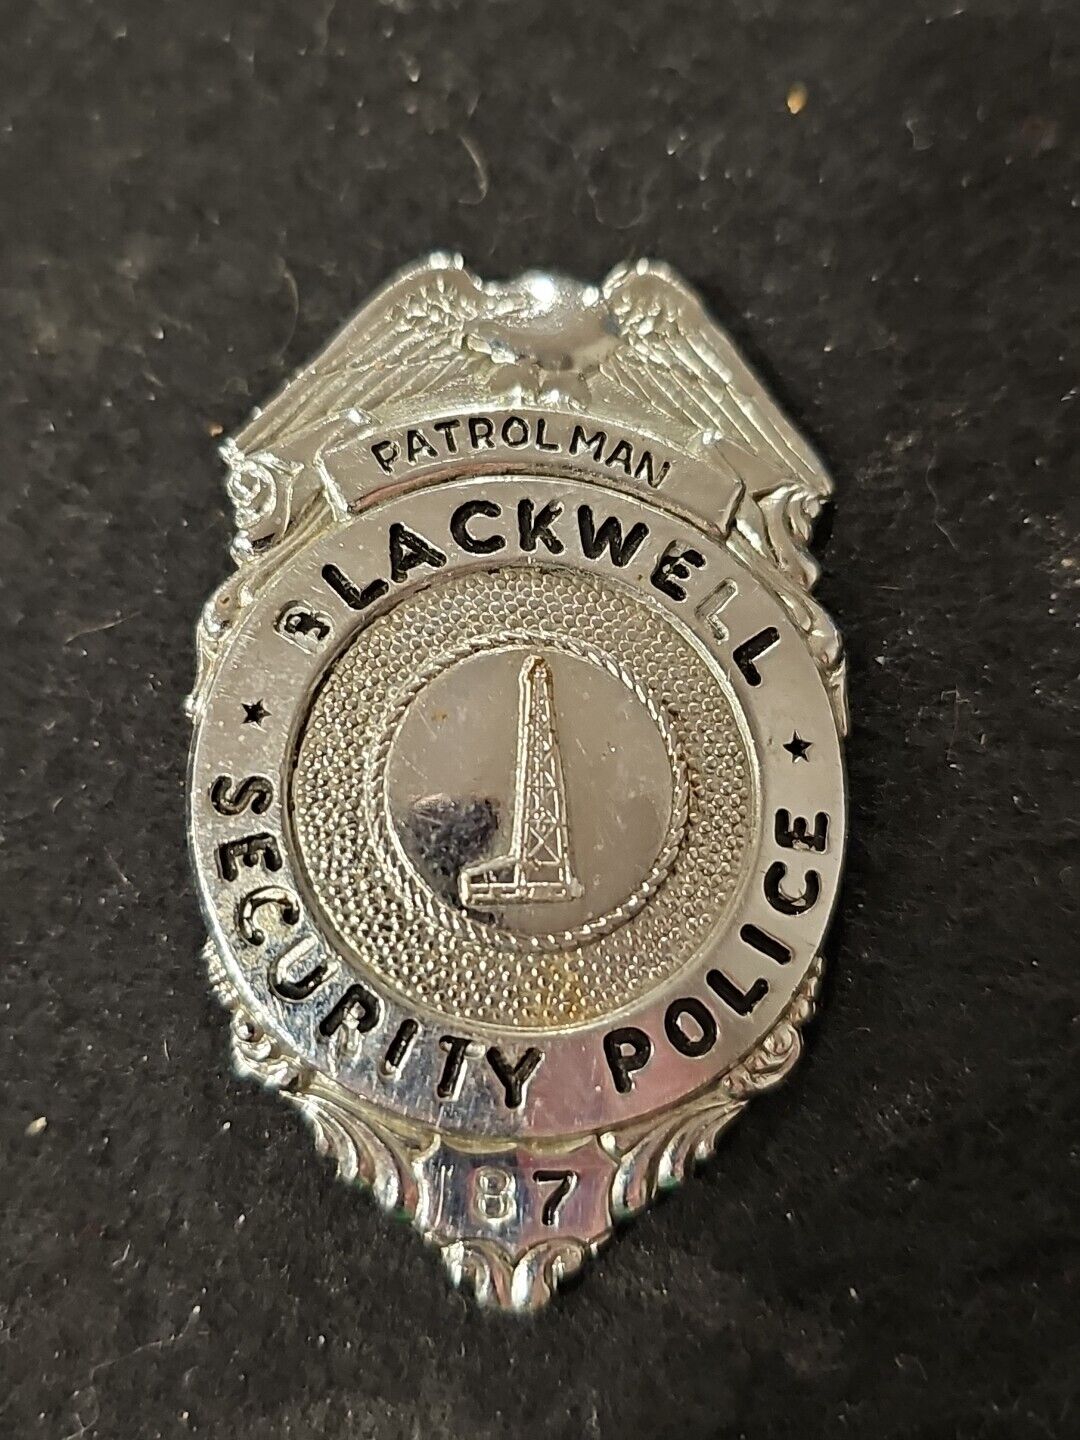 Vintage Obsolete Patrolman Blackwell Security Police Badge #87 Oil Derrick (19)